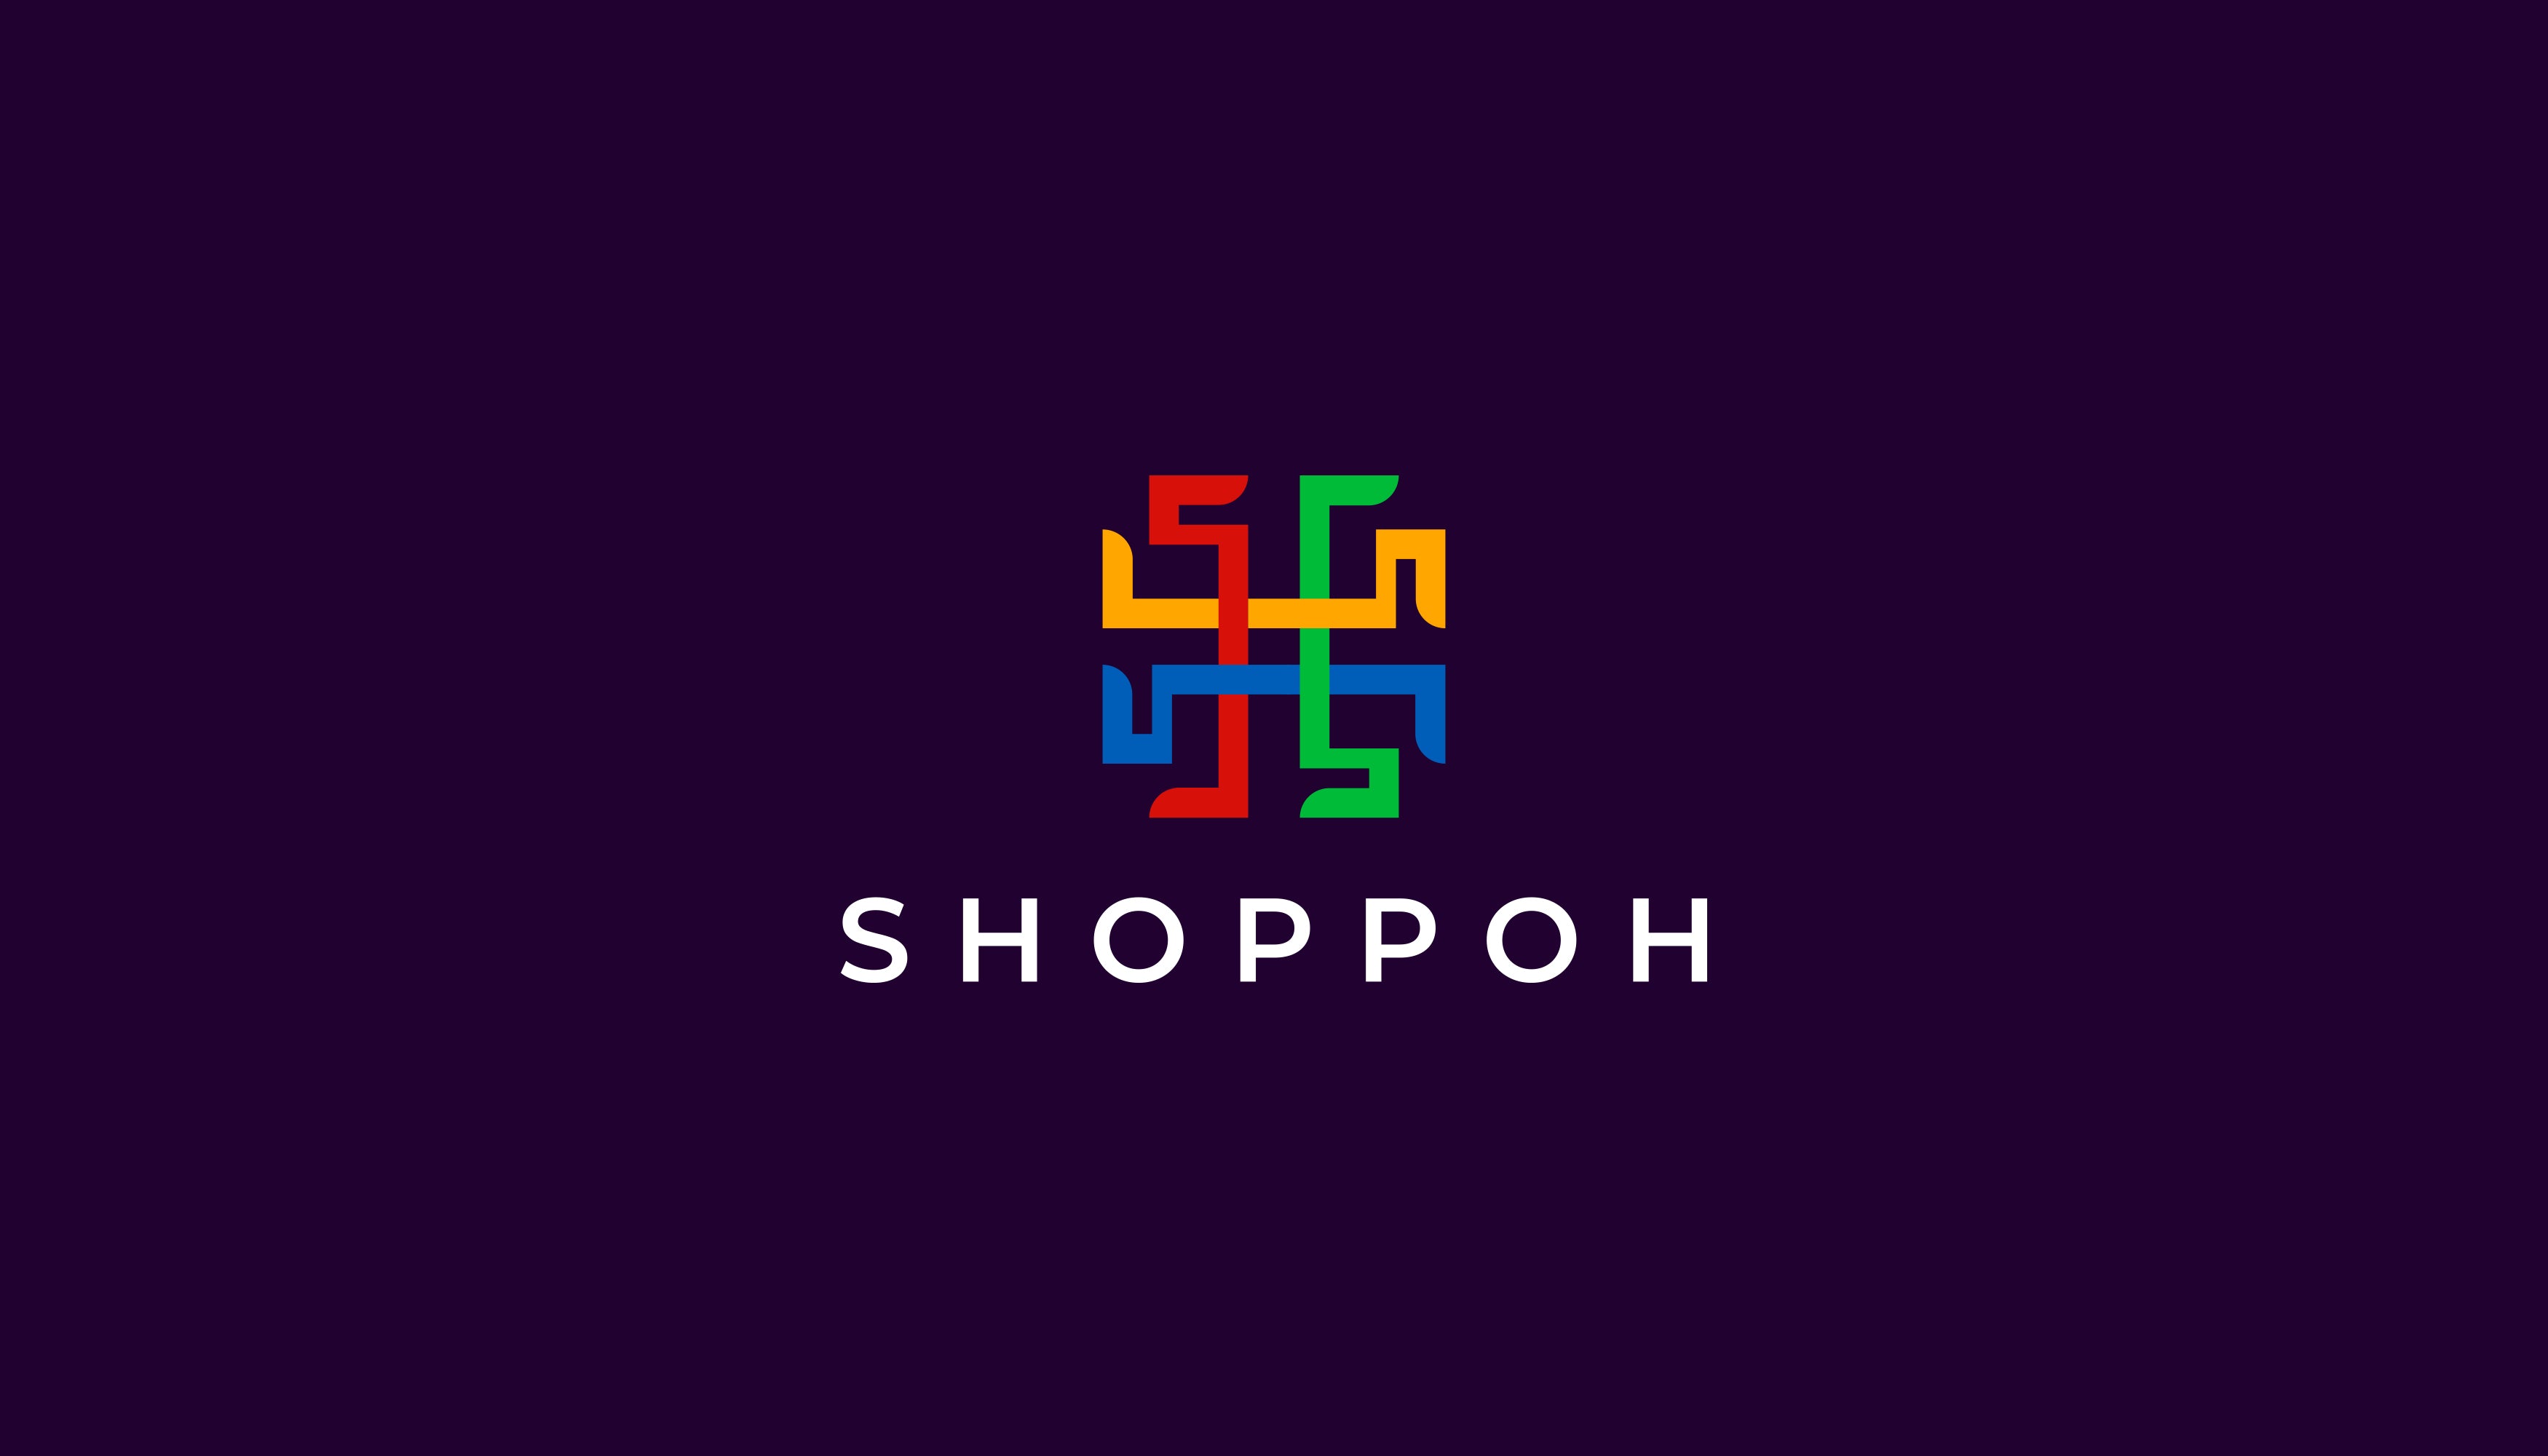 www.shoppoh.com